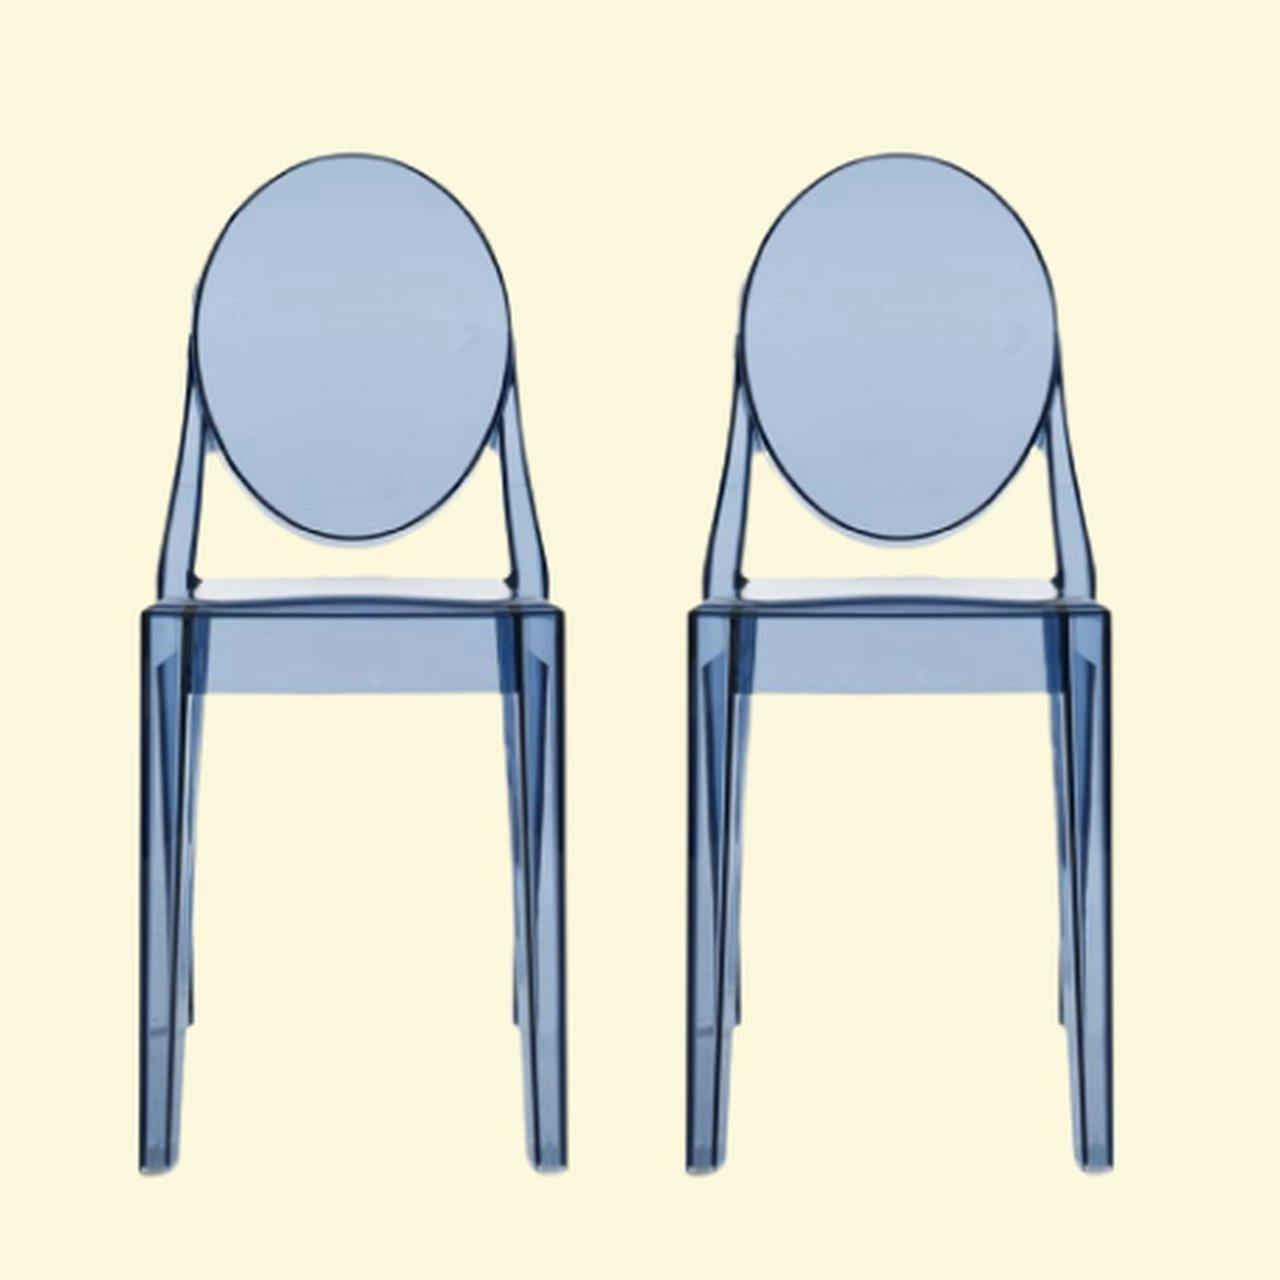 Topform Dining chairs